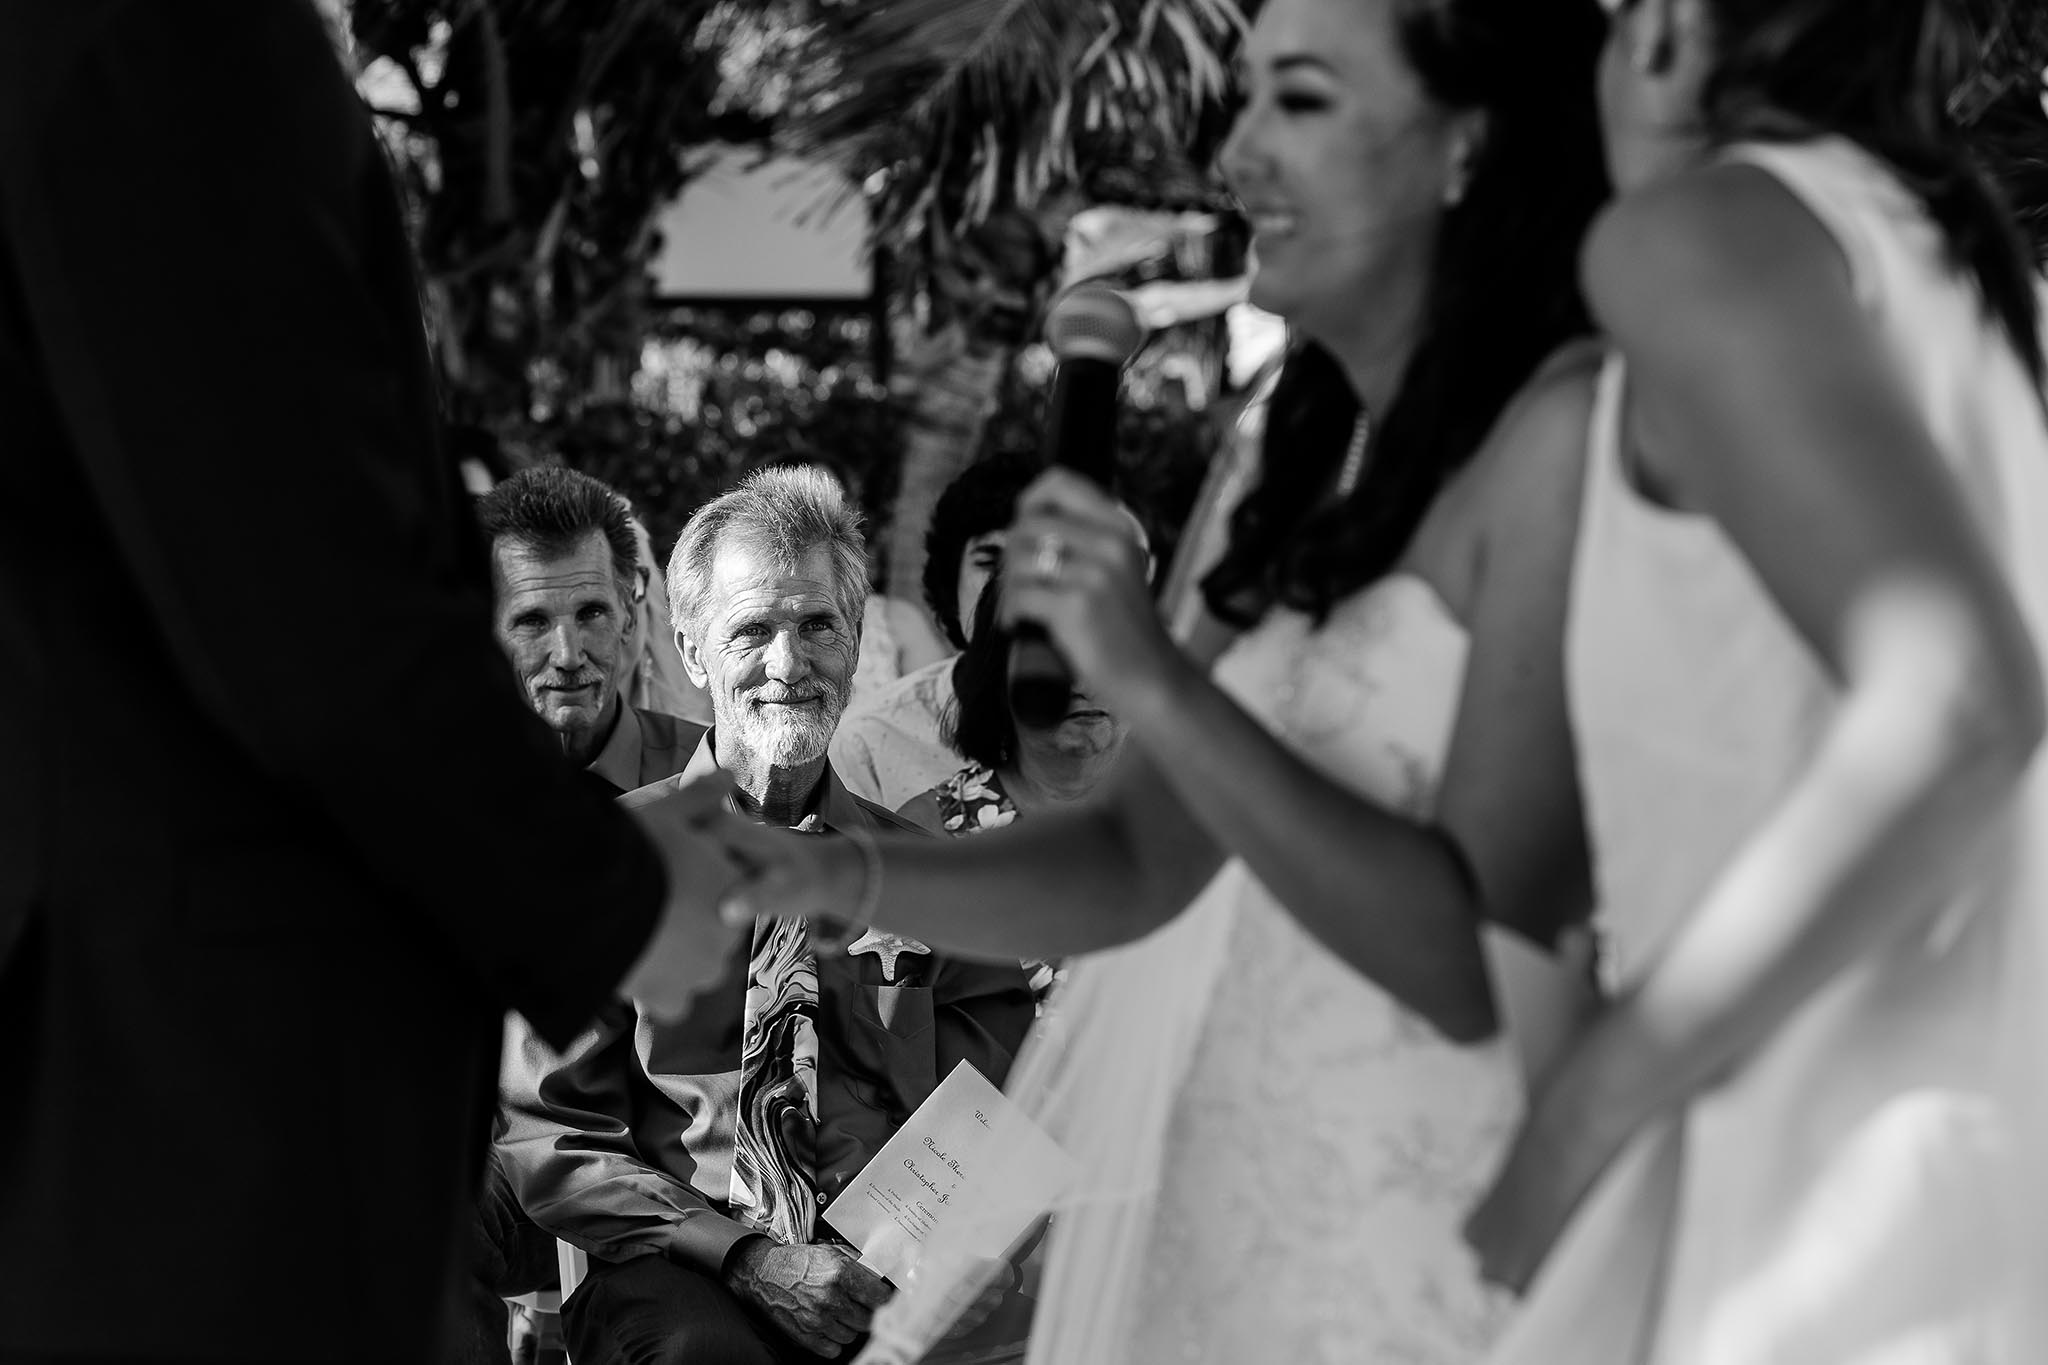 WEDDING AT DORADO ROYAL IN RIVIERA MAYA MEXICO